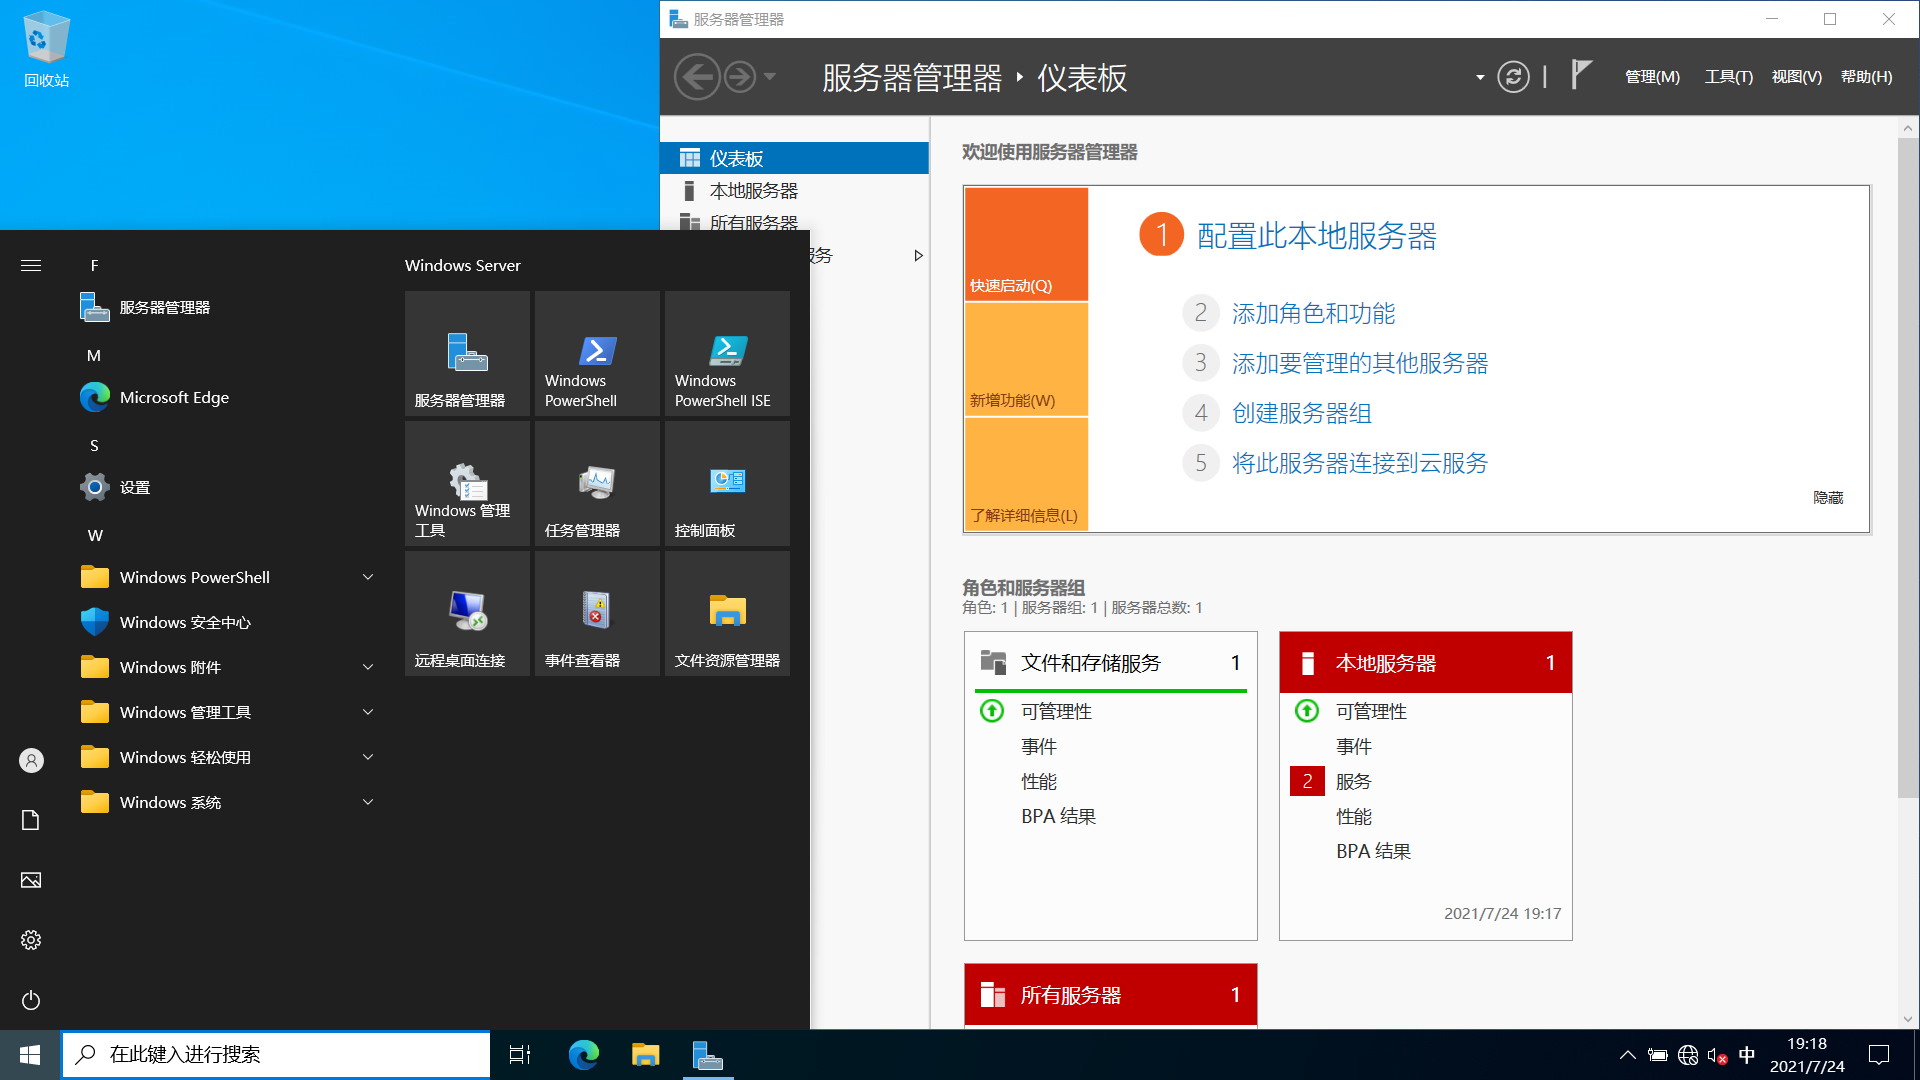 WindowsServer2022LTSCBuild20348.1简体中文版-程序员阿鑫-带你一起秃头-第2张图片